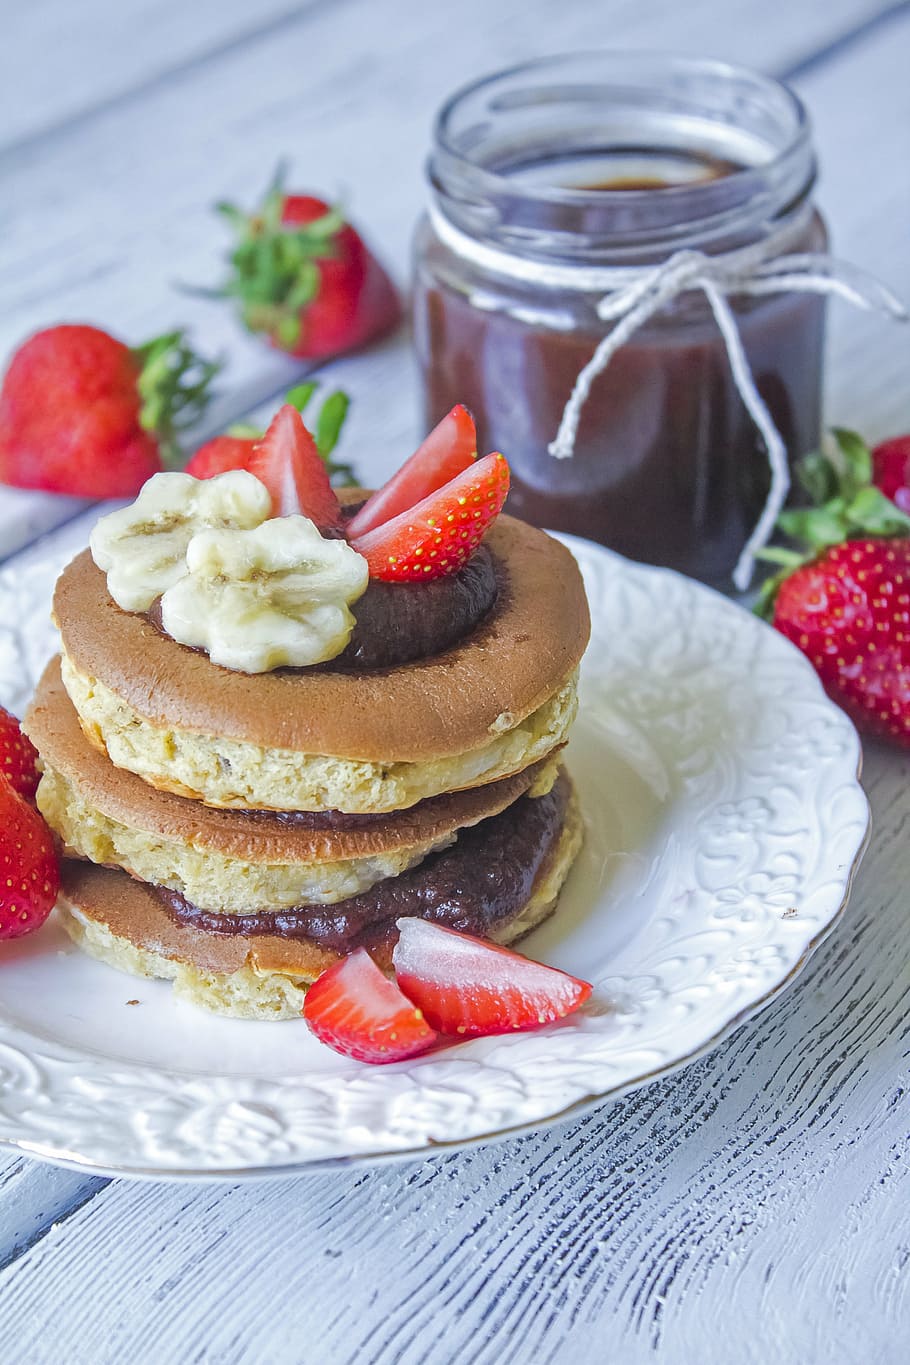 pancake, strawberries, jam, plate, food, hash browns, pancakes, nutrition, appetizing, calories